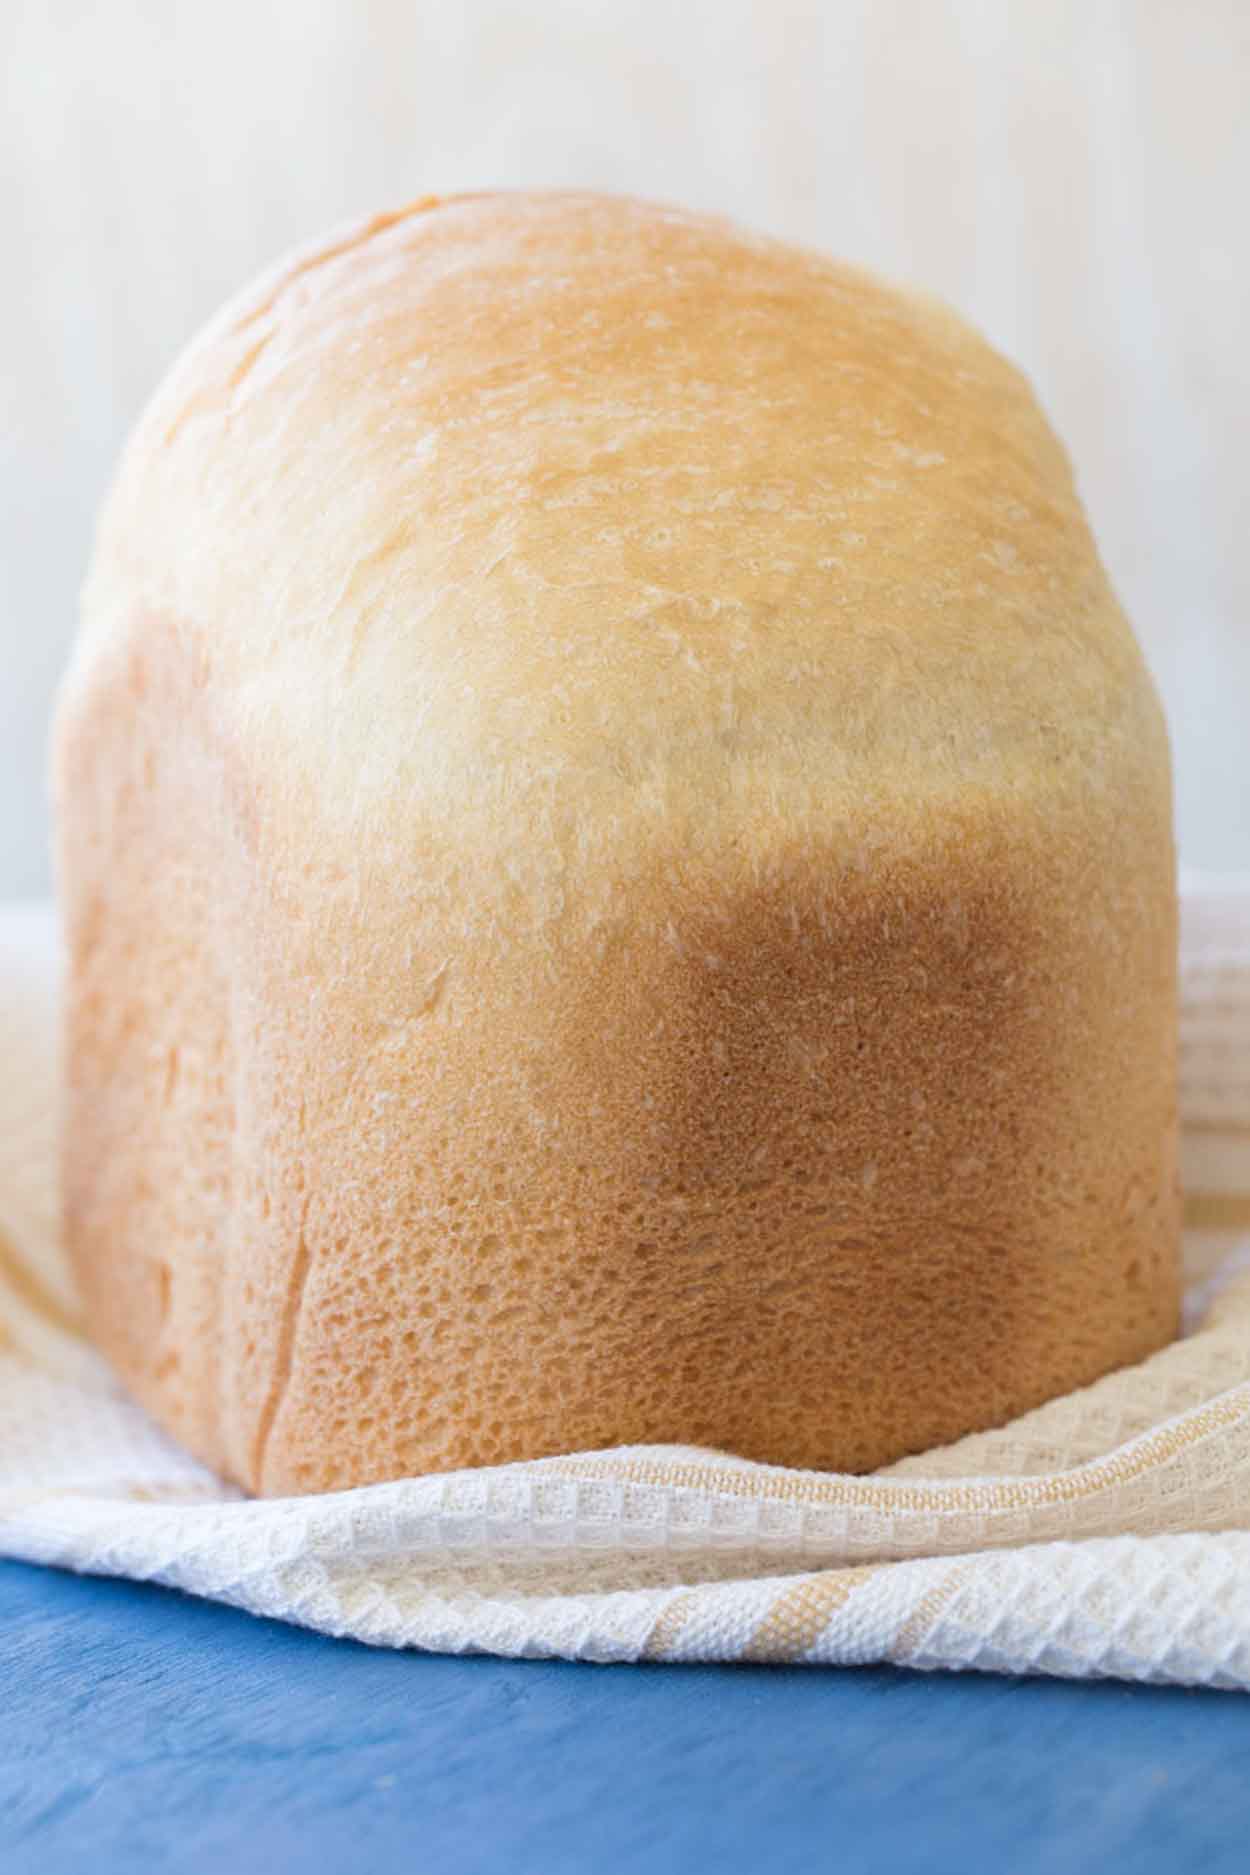 most popular bread machine